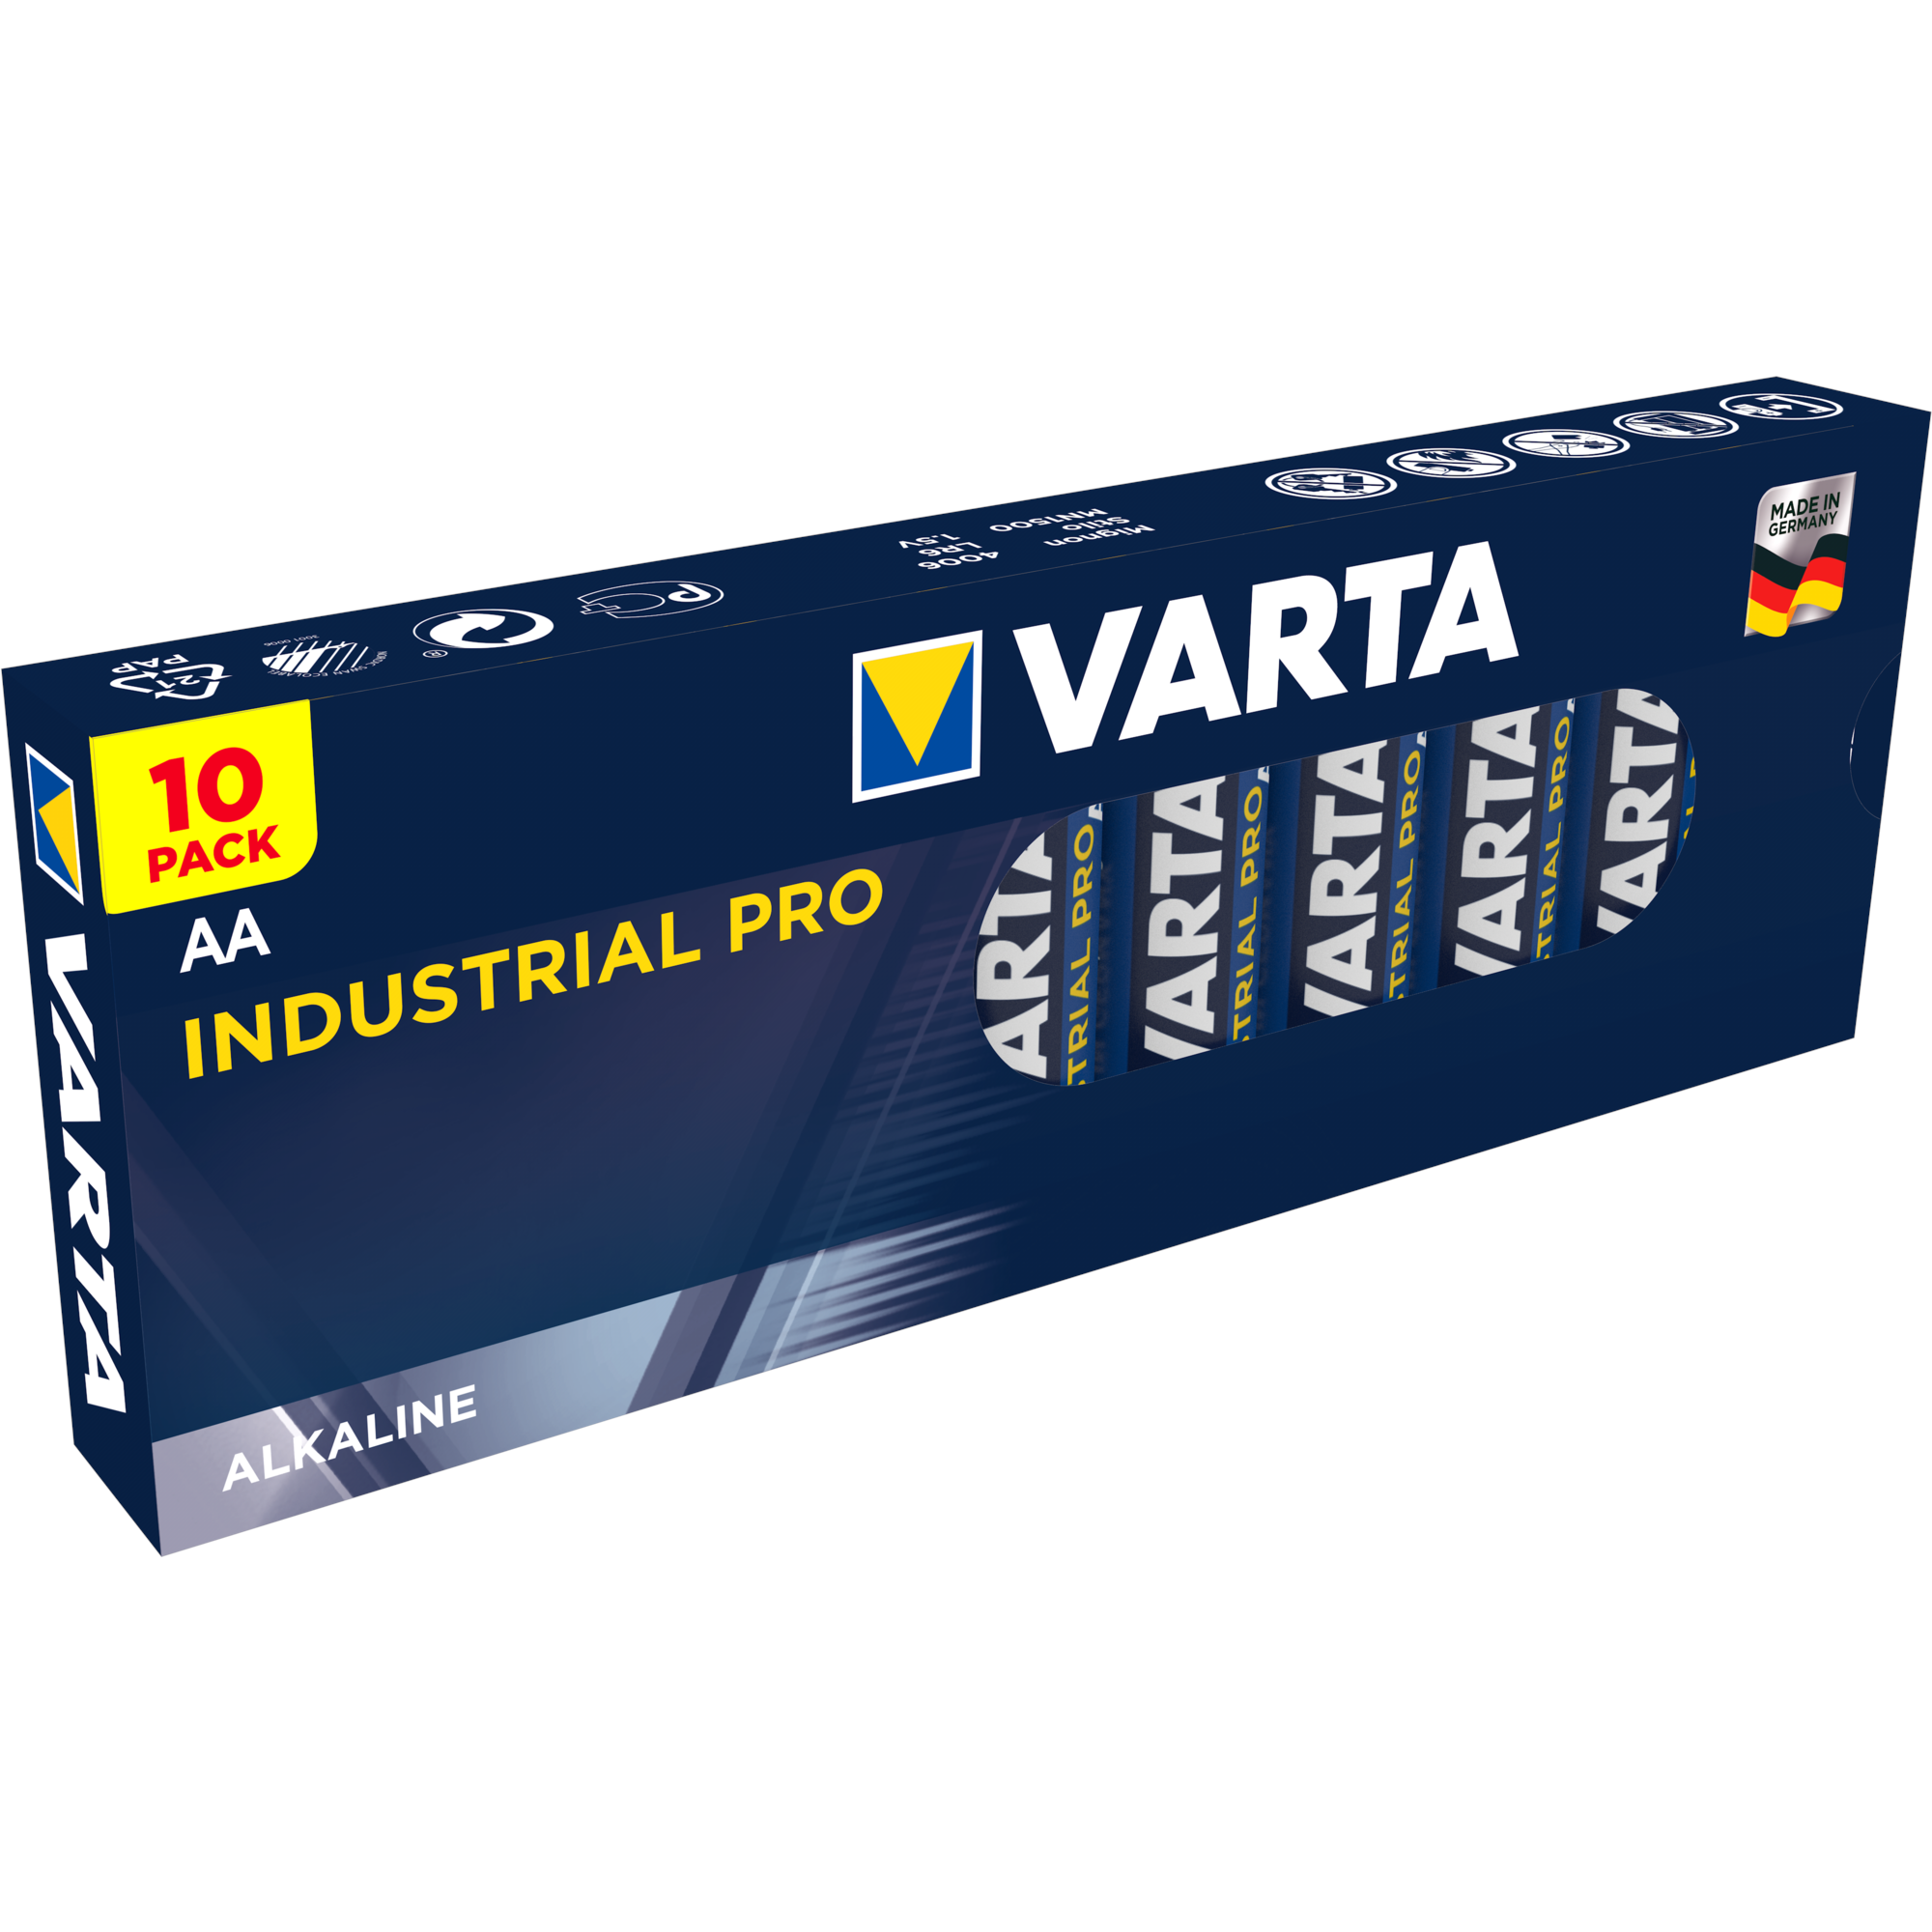 Varta Industrial PRO Alkaline  AA, 10-Pack